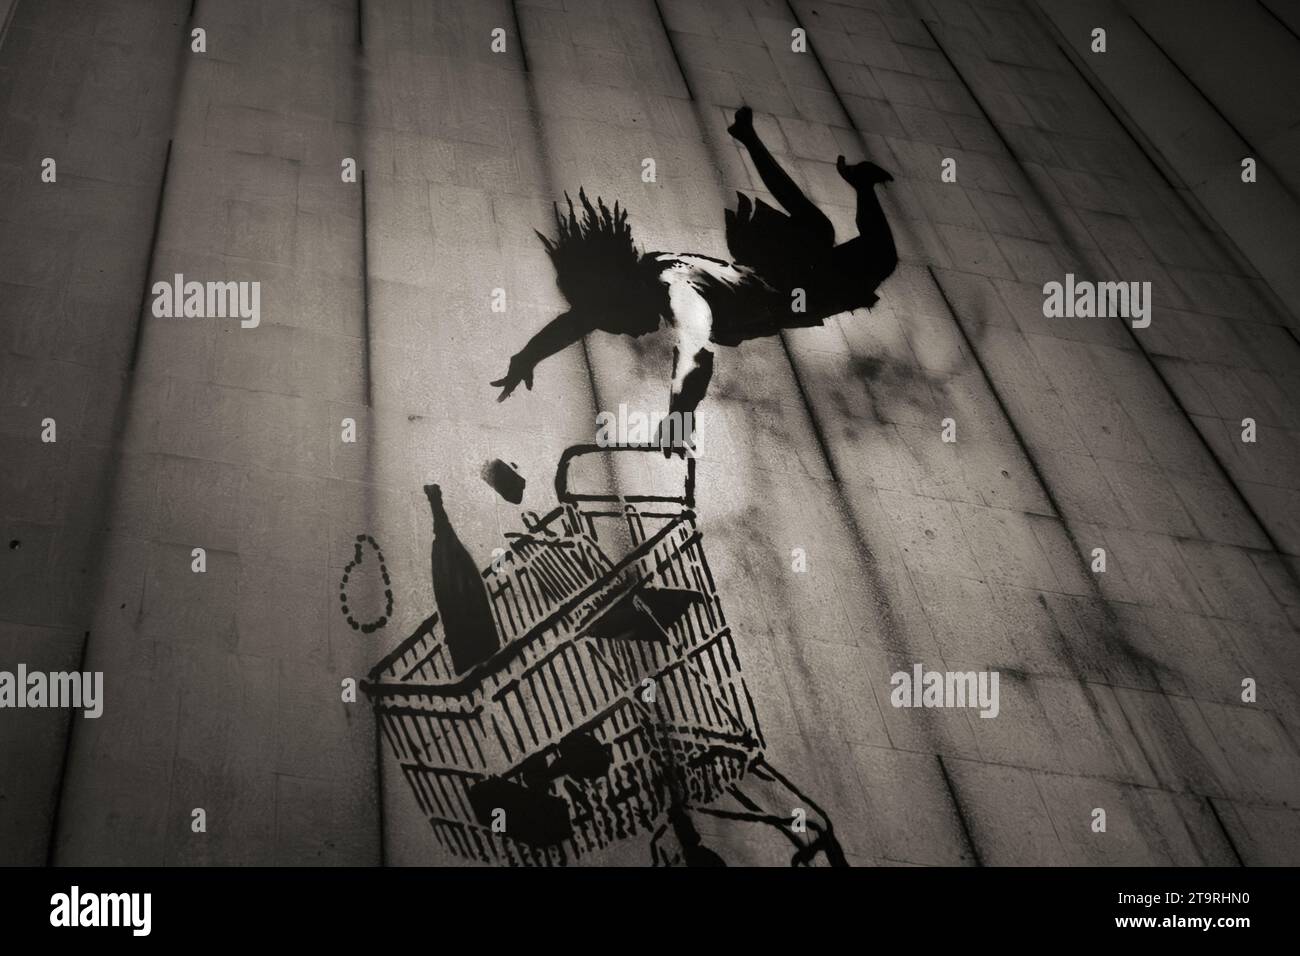 Barcelona - Spanien Ca. Februar 2022. Banksy-Graffiti-Poster auf der Banksy-Ausstellung in Barcelona. Banksy Falling Shopper. Shoppen Sie bis zum Umfallen. Stockfoto